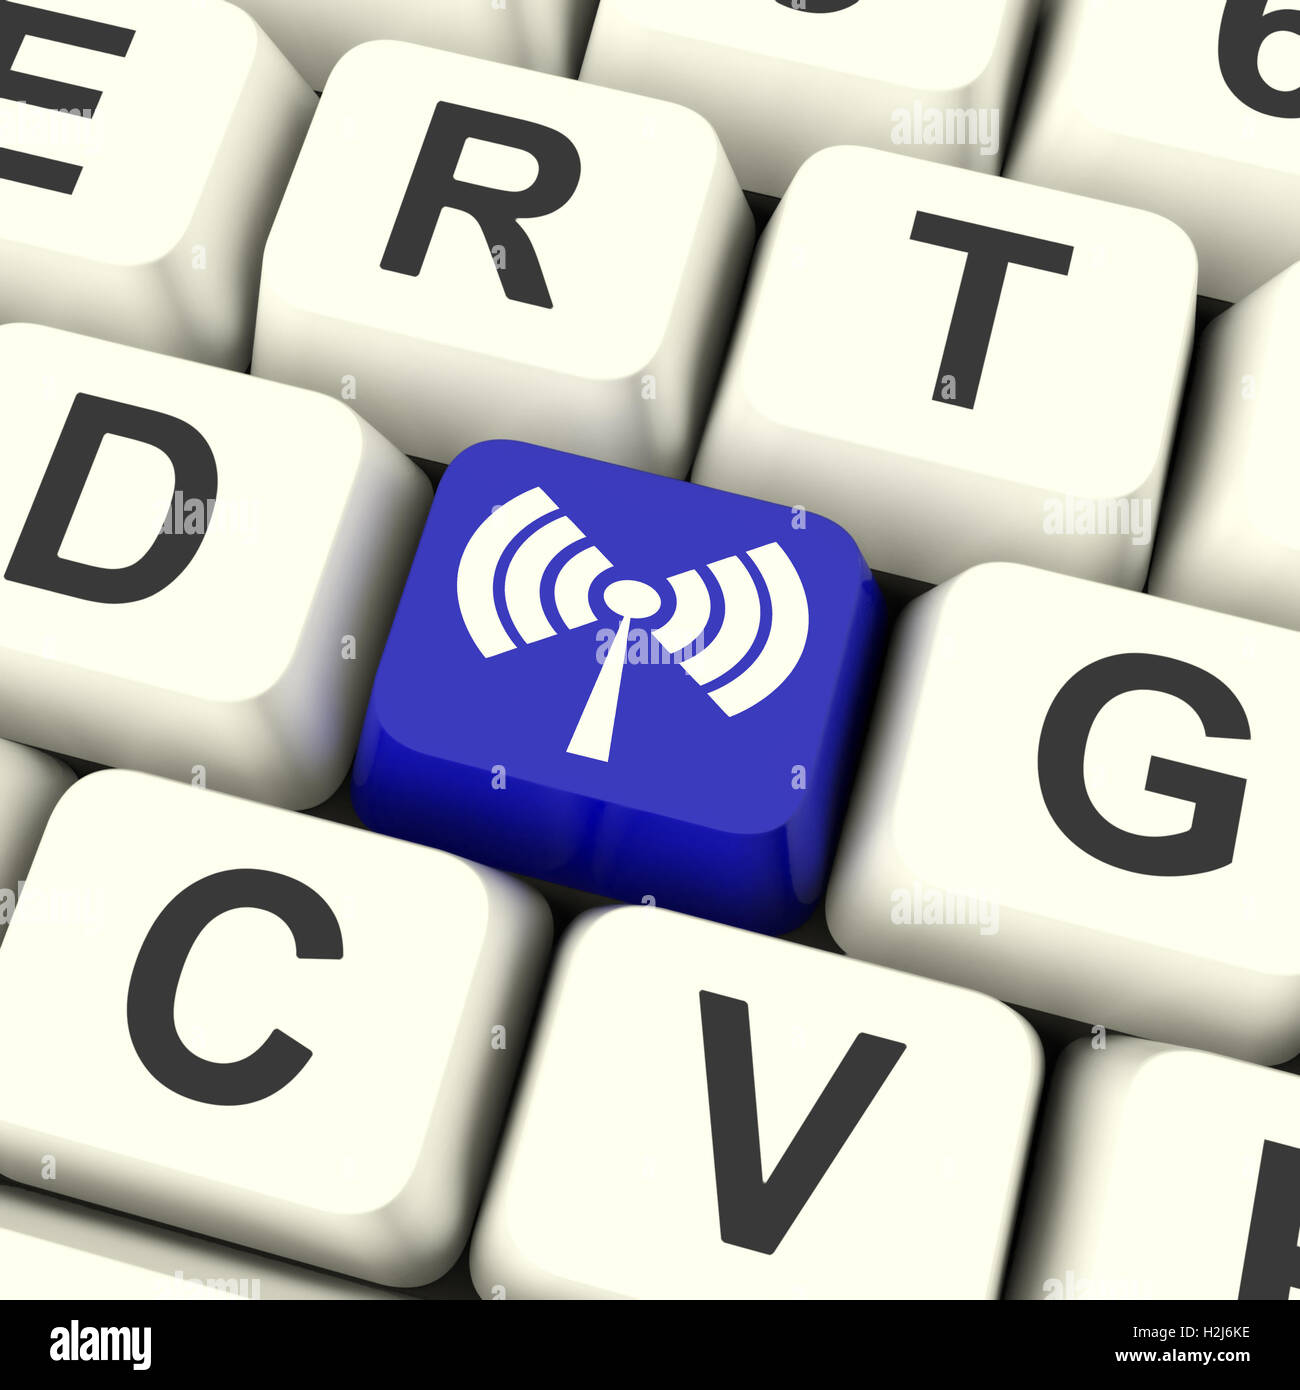 Wifi Key Shows Wireless Internet Access Transmitter Stock Photo